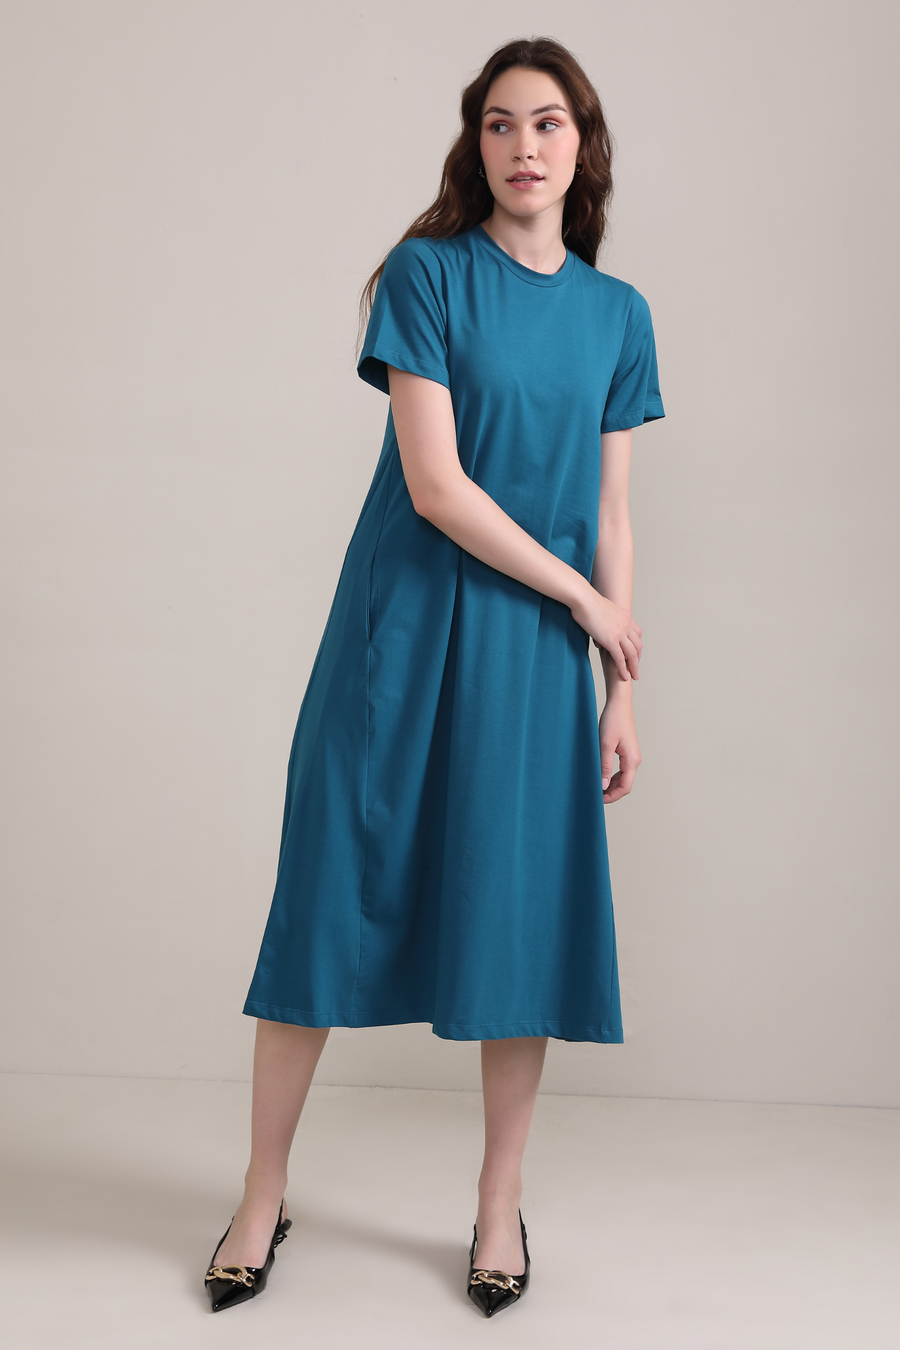 Luna A-Line Dress-Teal Blue